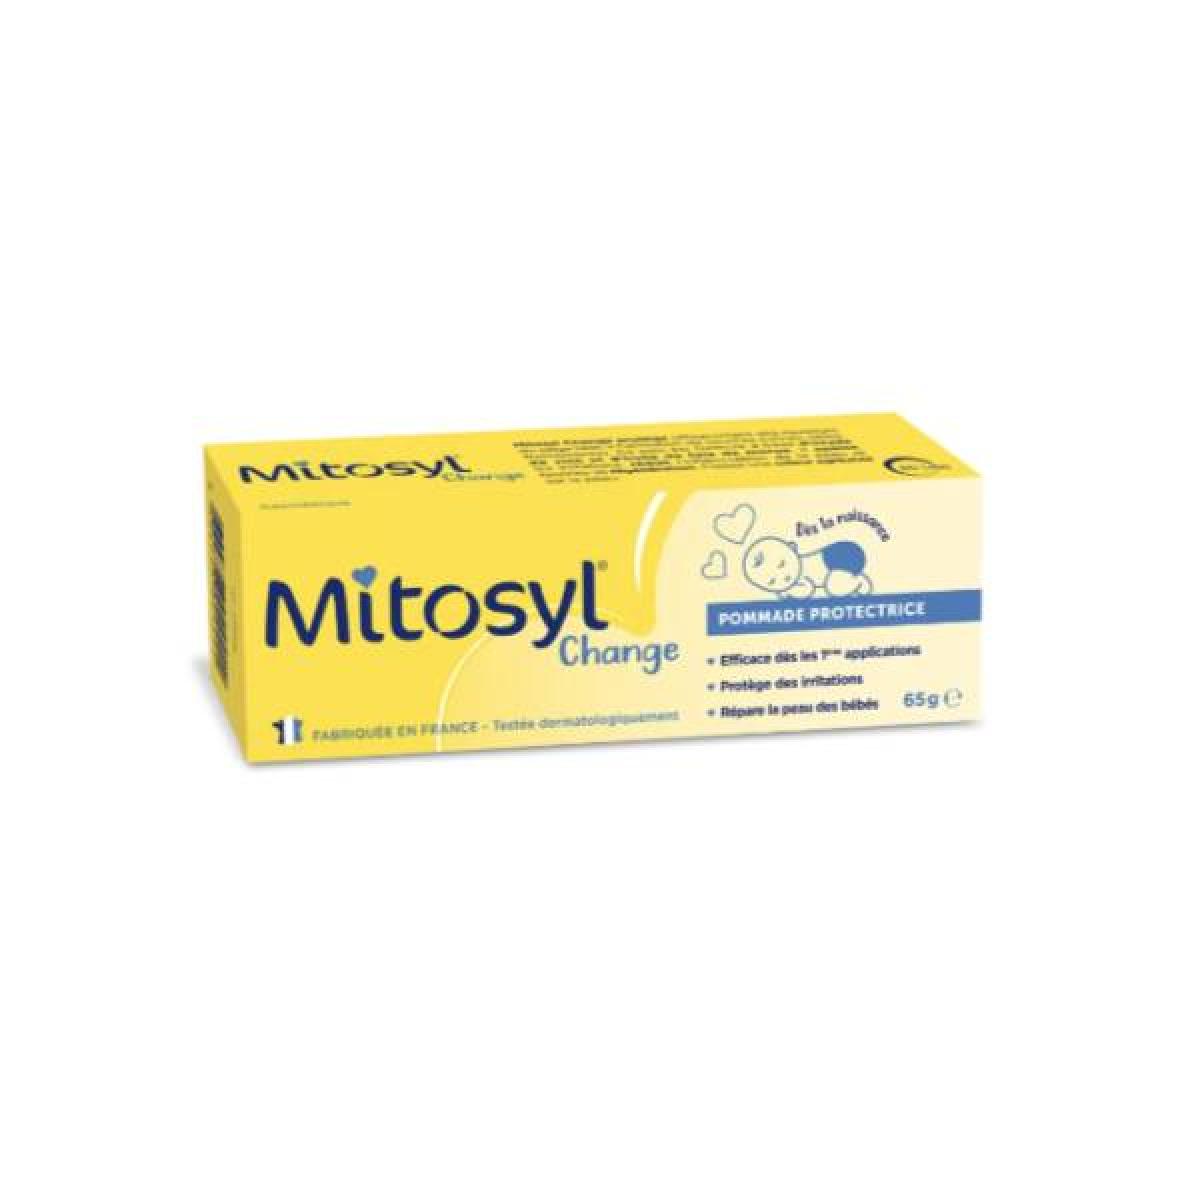 MITOSYL Change pommade protectrice 65g - Parapharmacie - Pharmarket